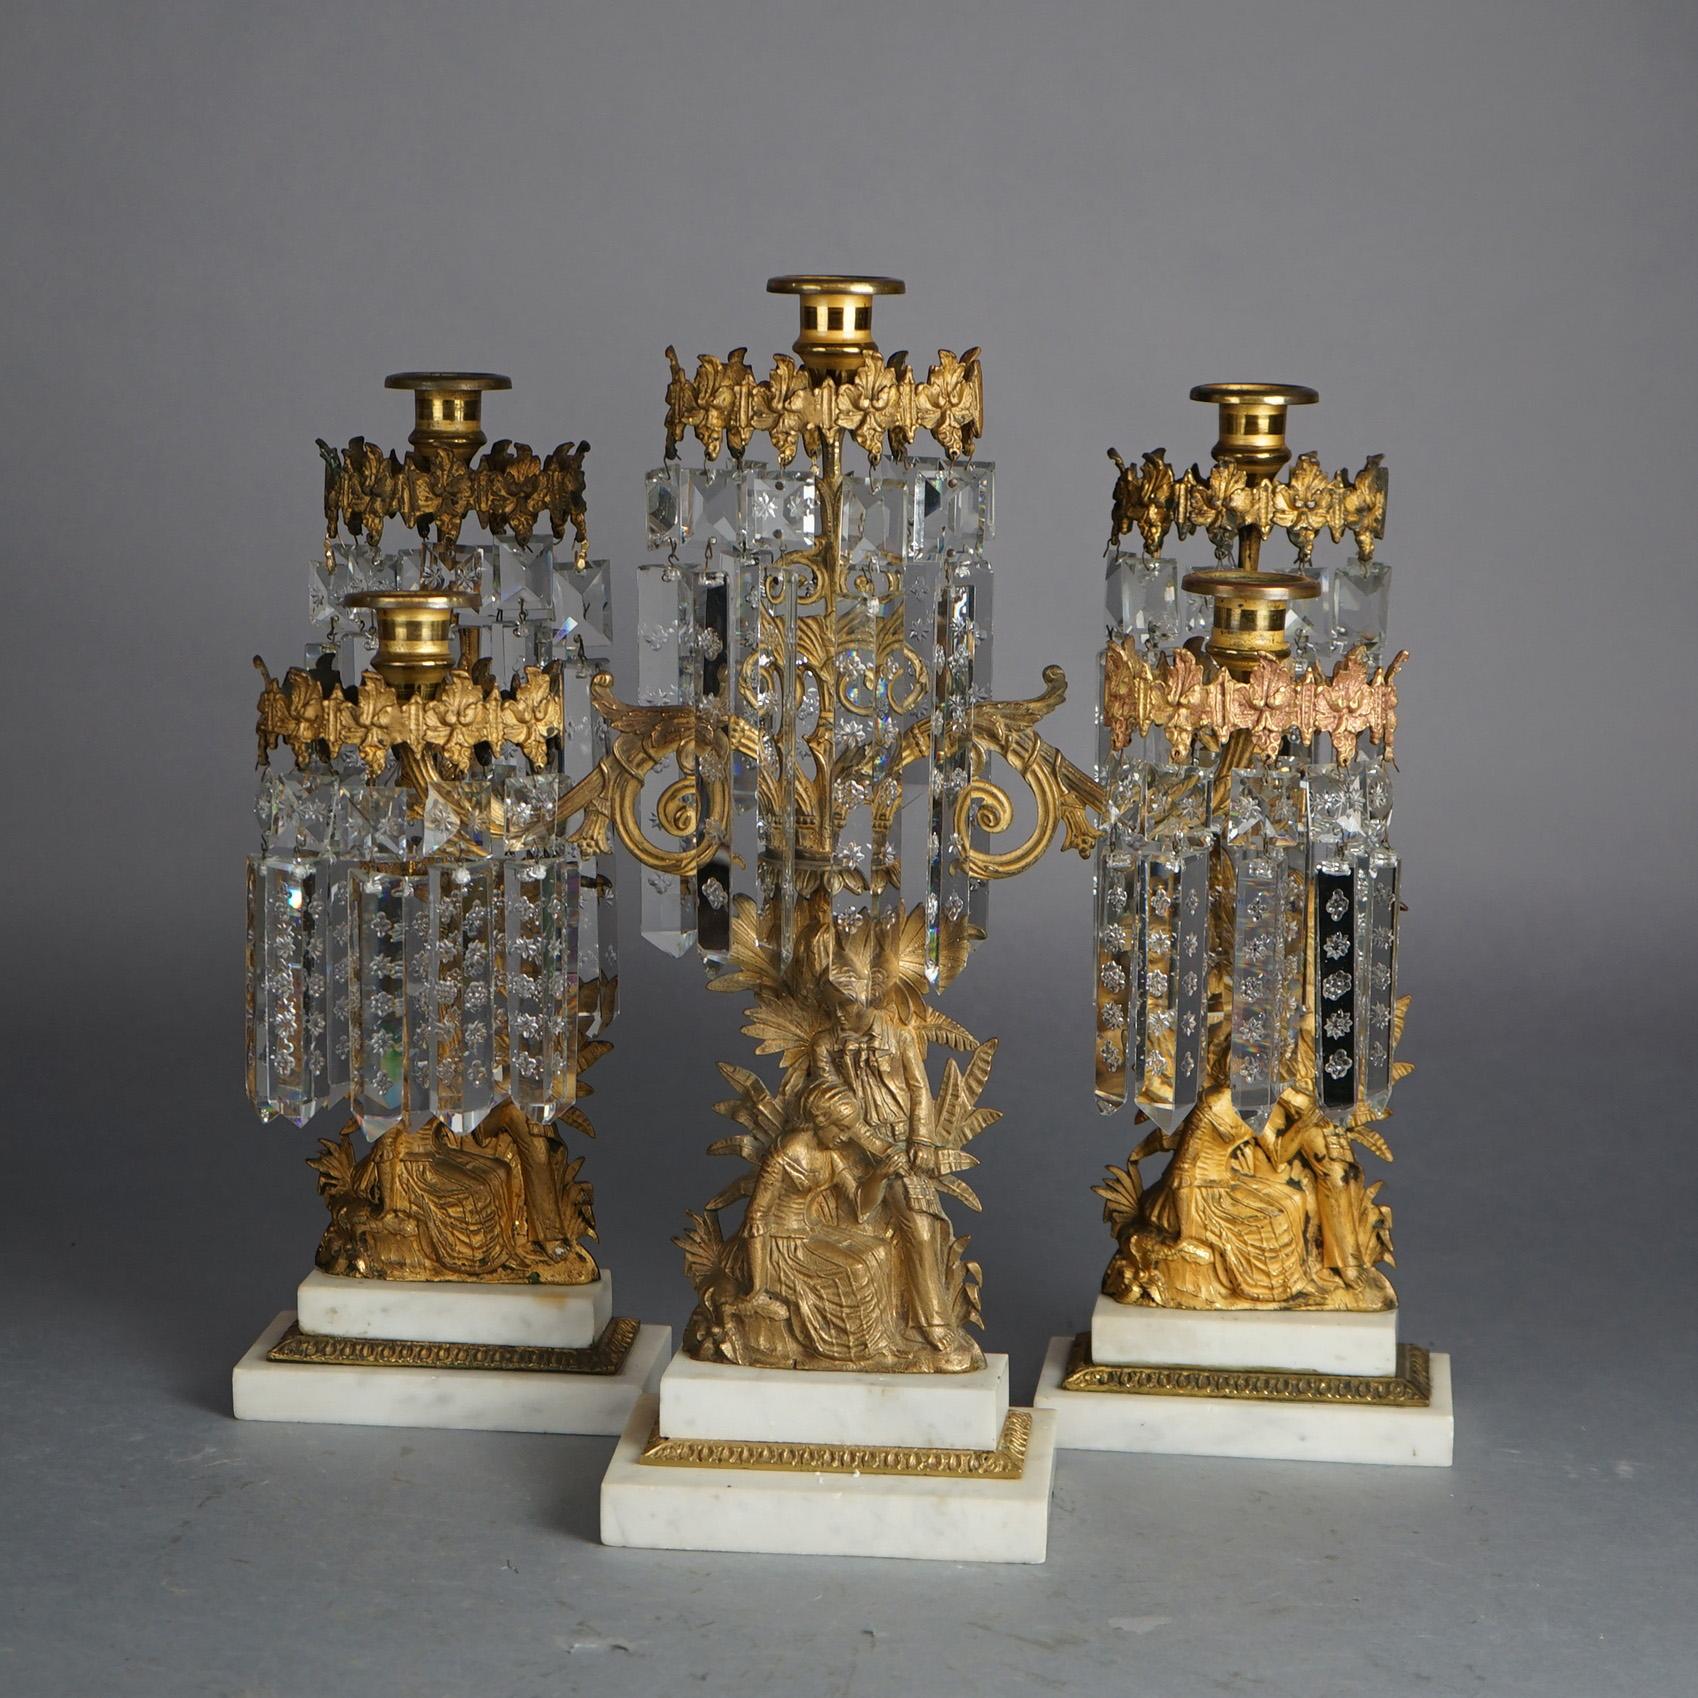 Victorian Antique Gilt Bronze American Girandole Candelabras with Marble & Crystals C1880